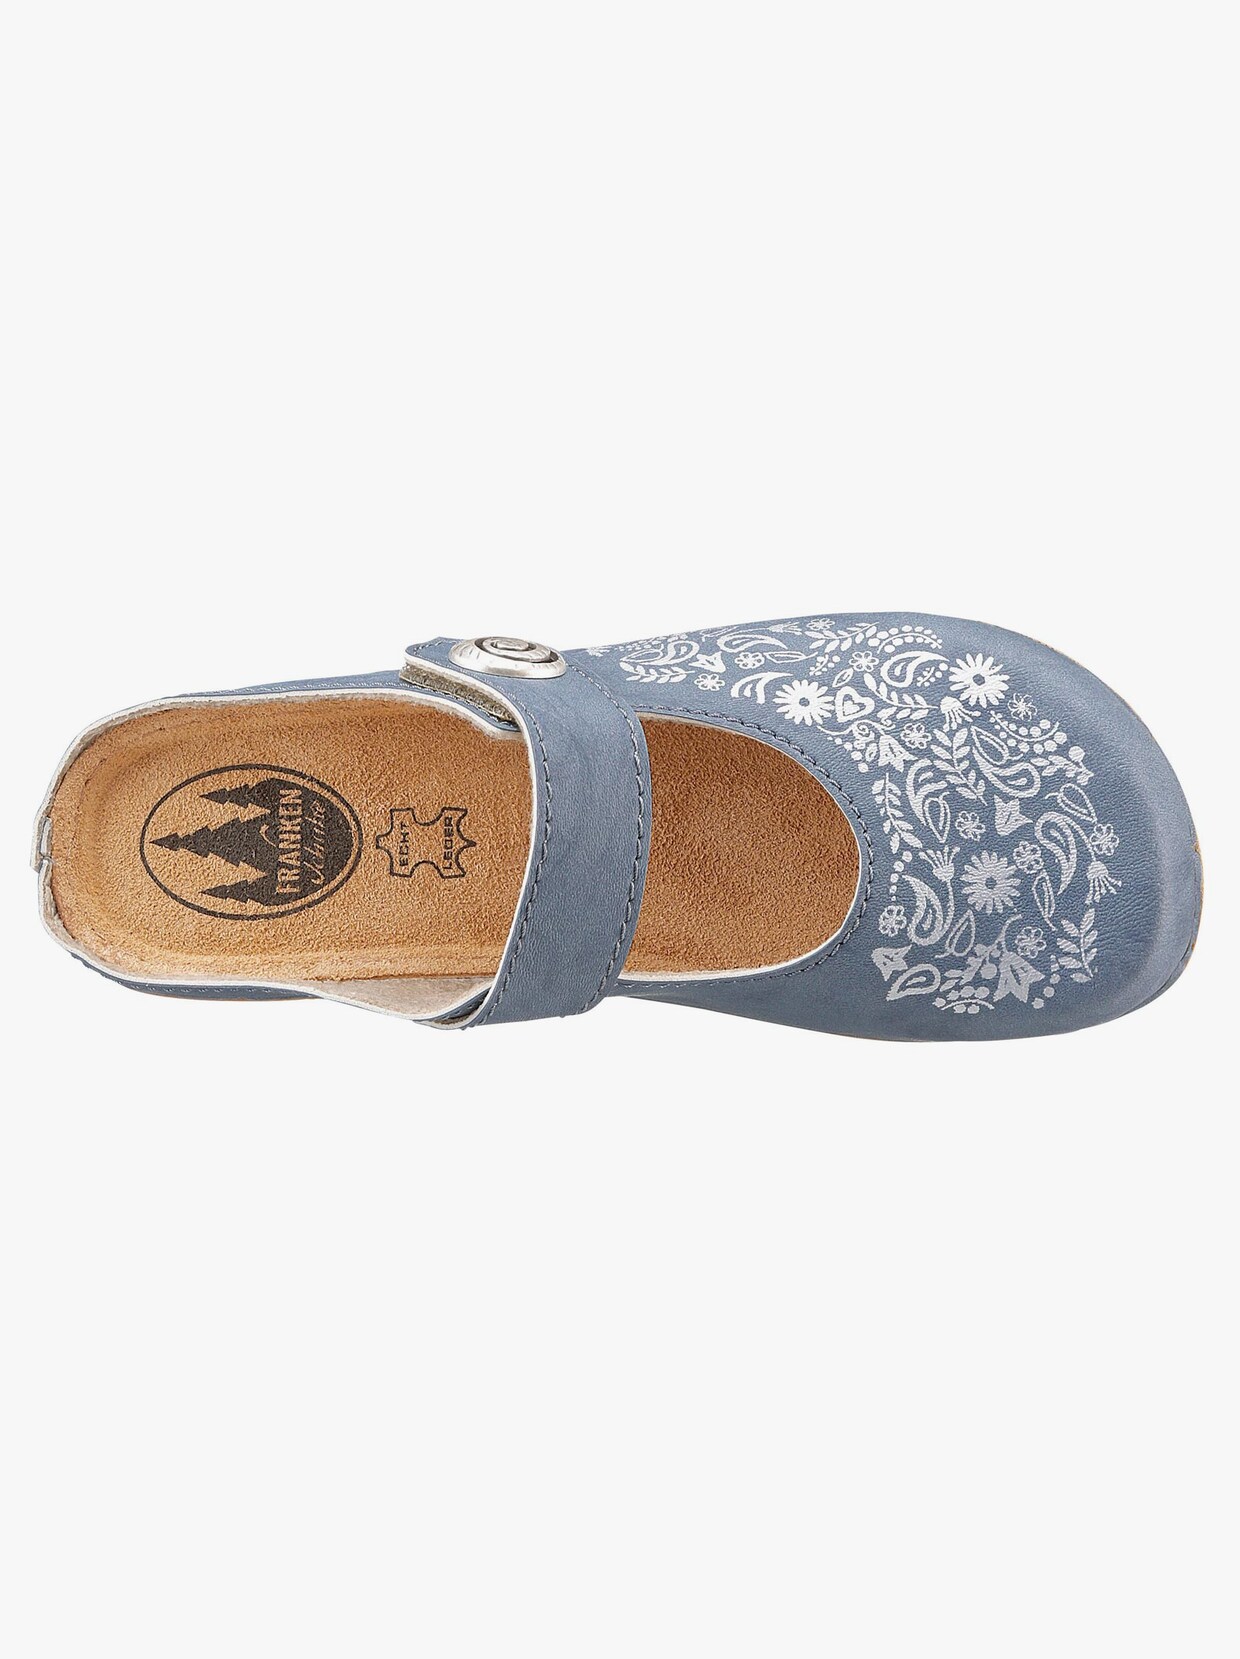 Franken Schuhe Clogs - jeansblau